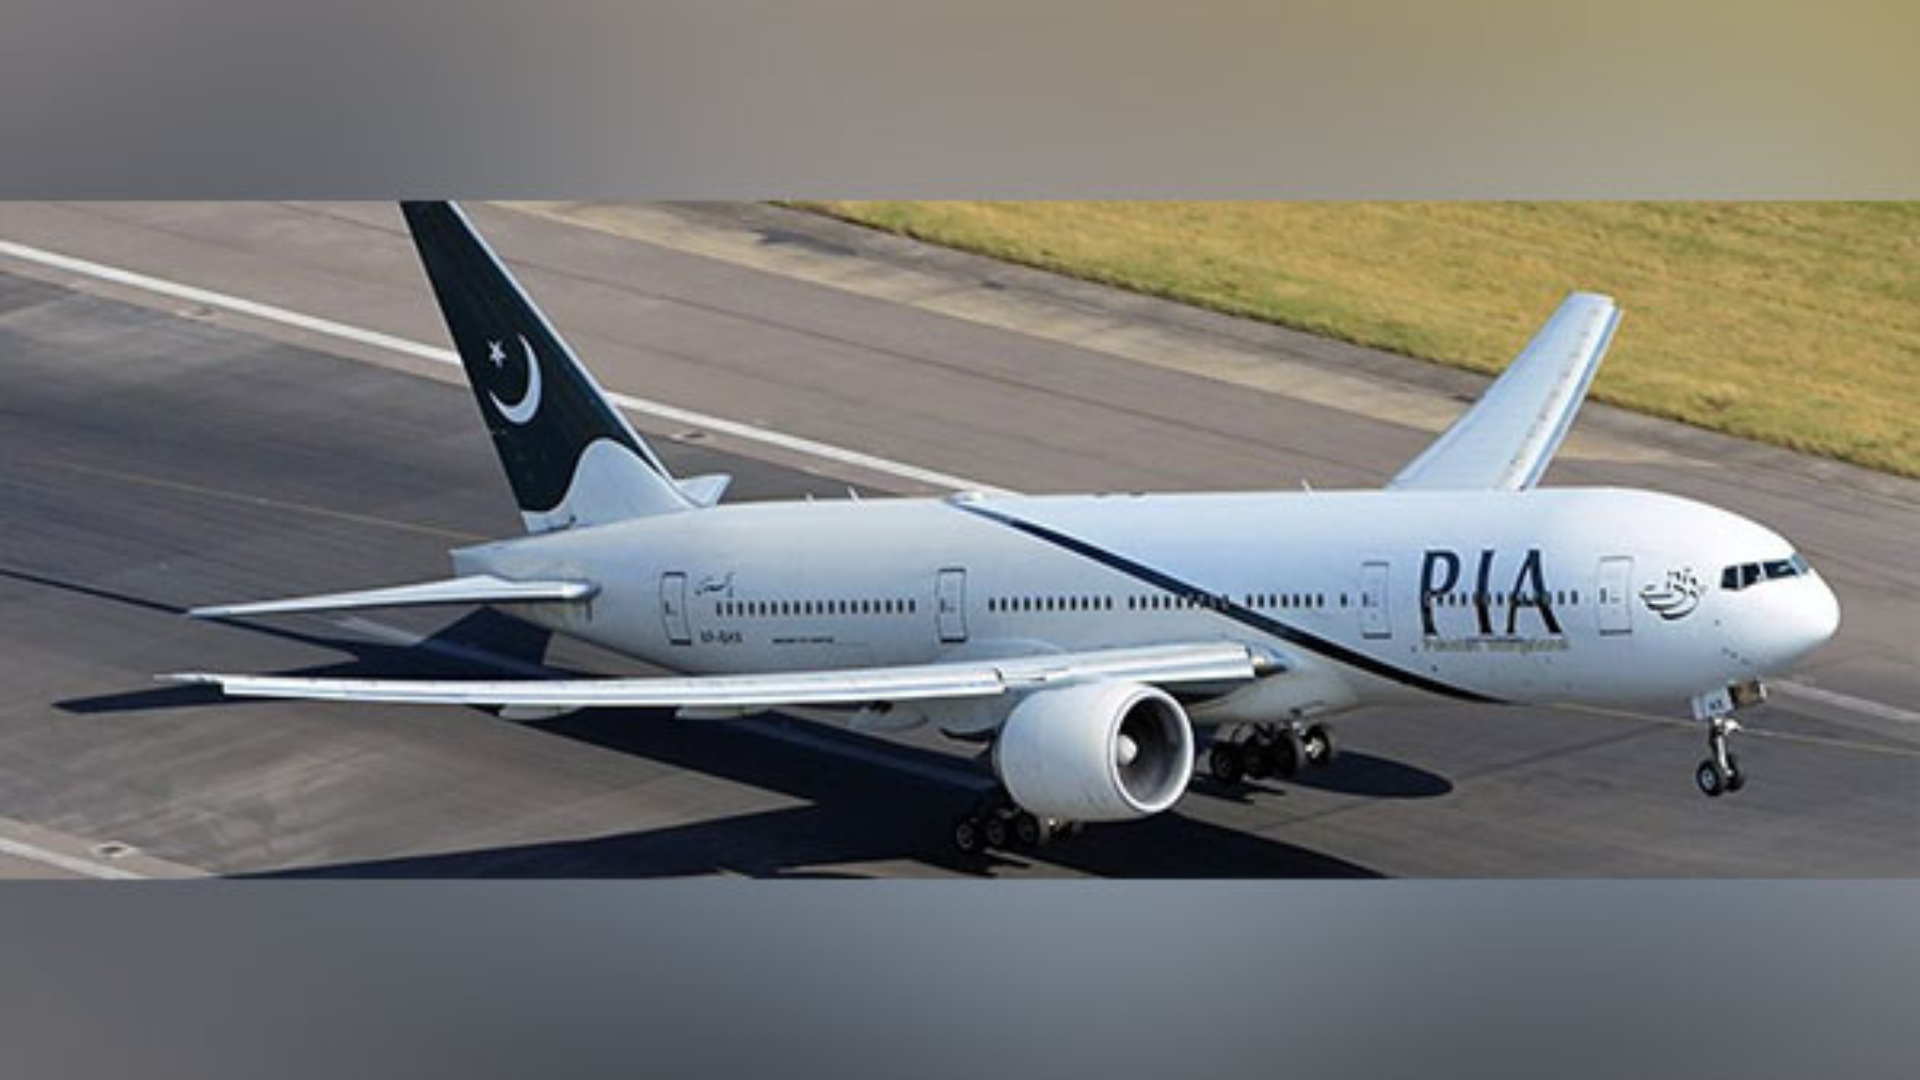 PIA Pakistani Air Carrier: EU Maintains Ban